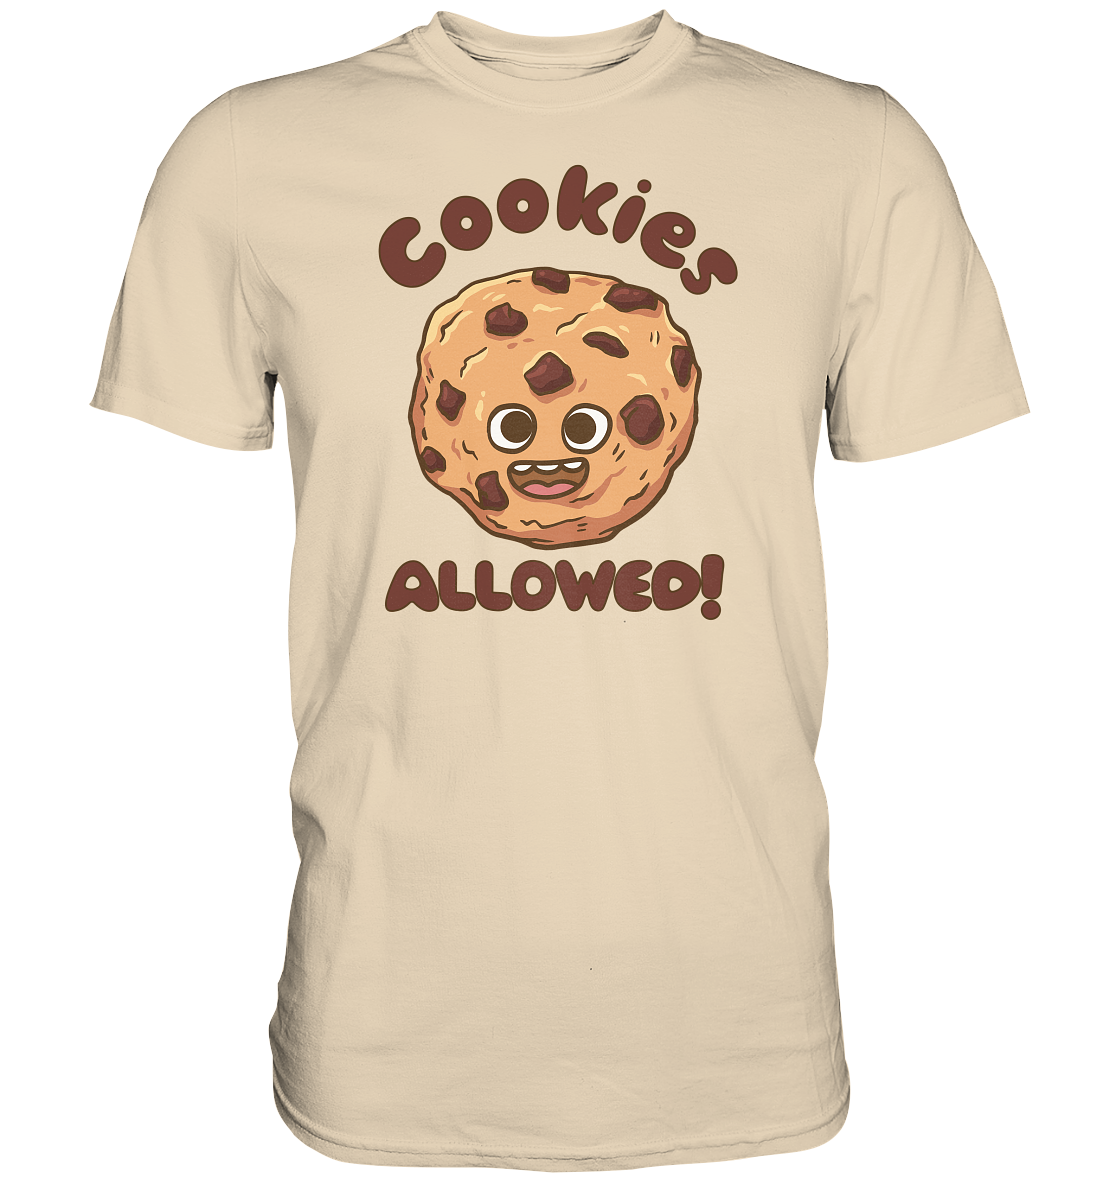 Cookies allowed! - Premium Shirt